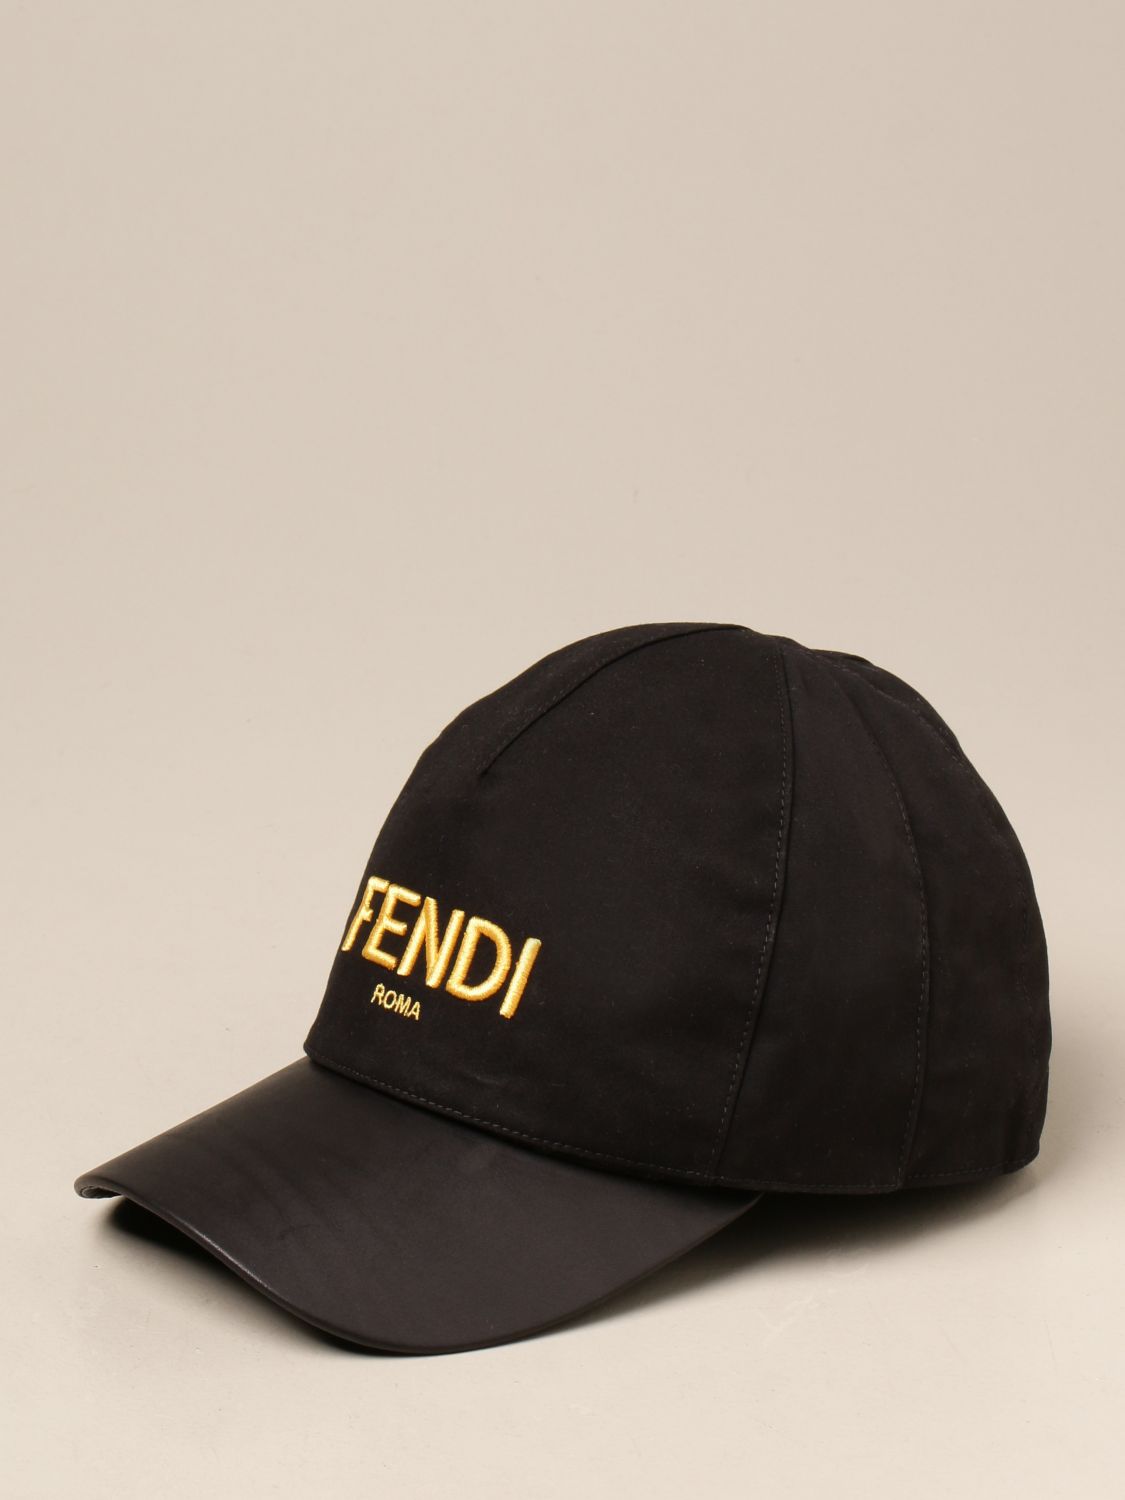 FENDI: 帽子 メンズ - ブラック | 帽子 Fendi FXQ771 AFHB GIGLIO.COM